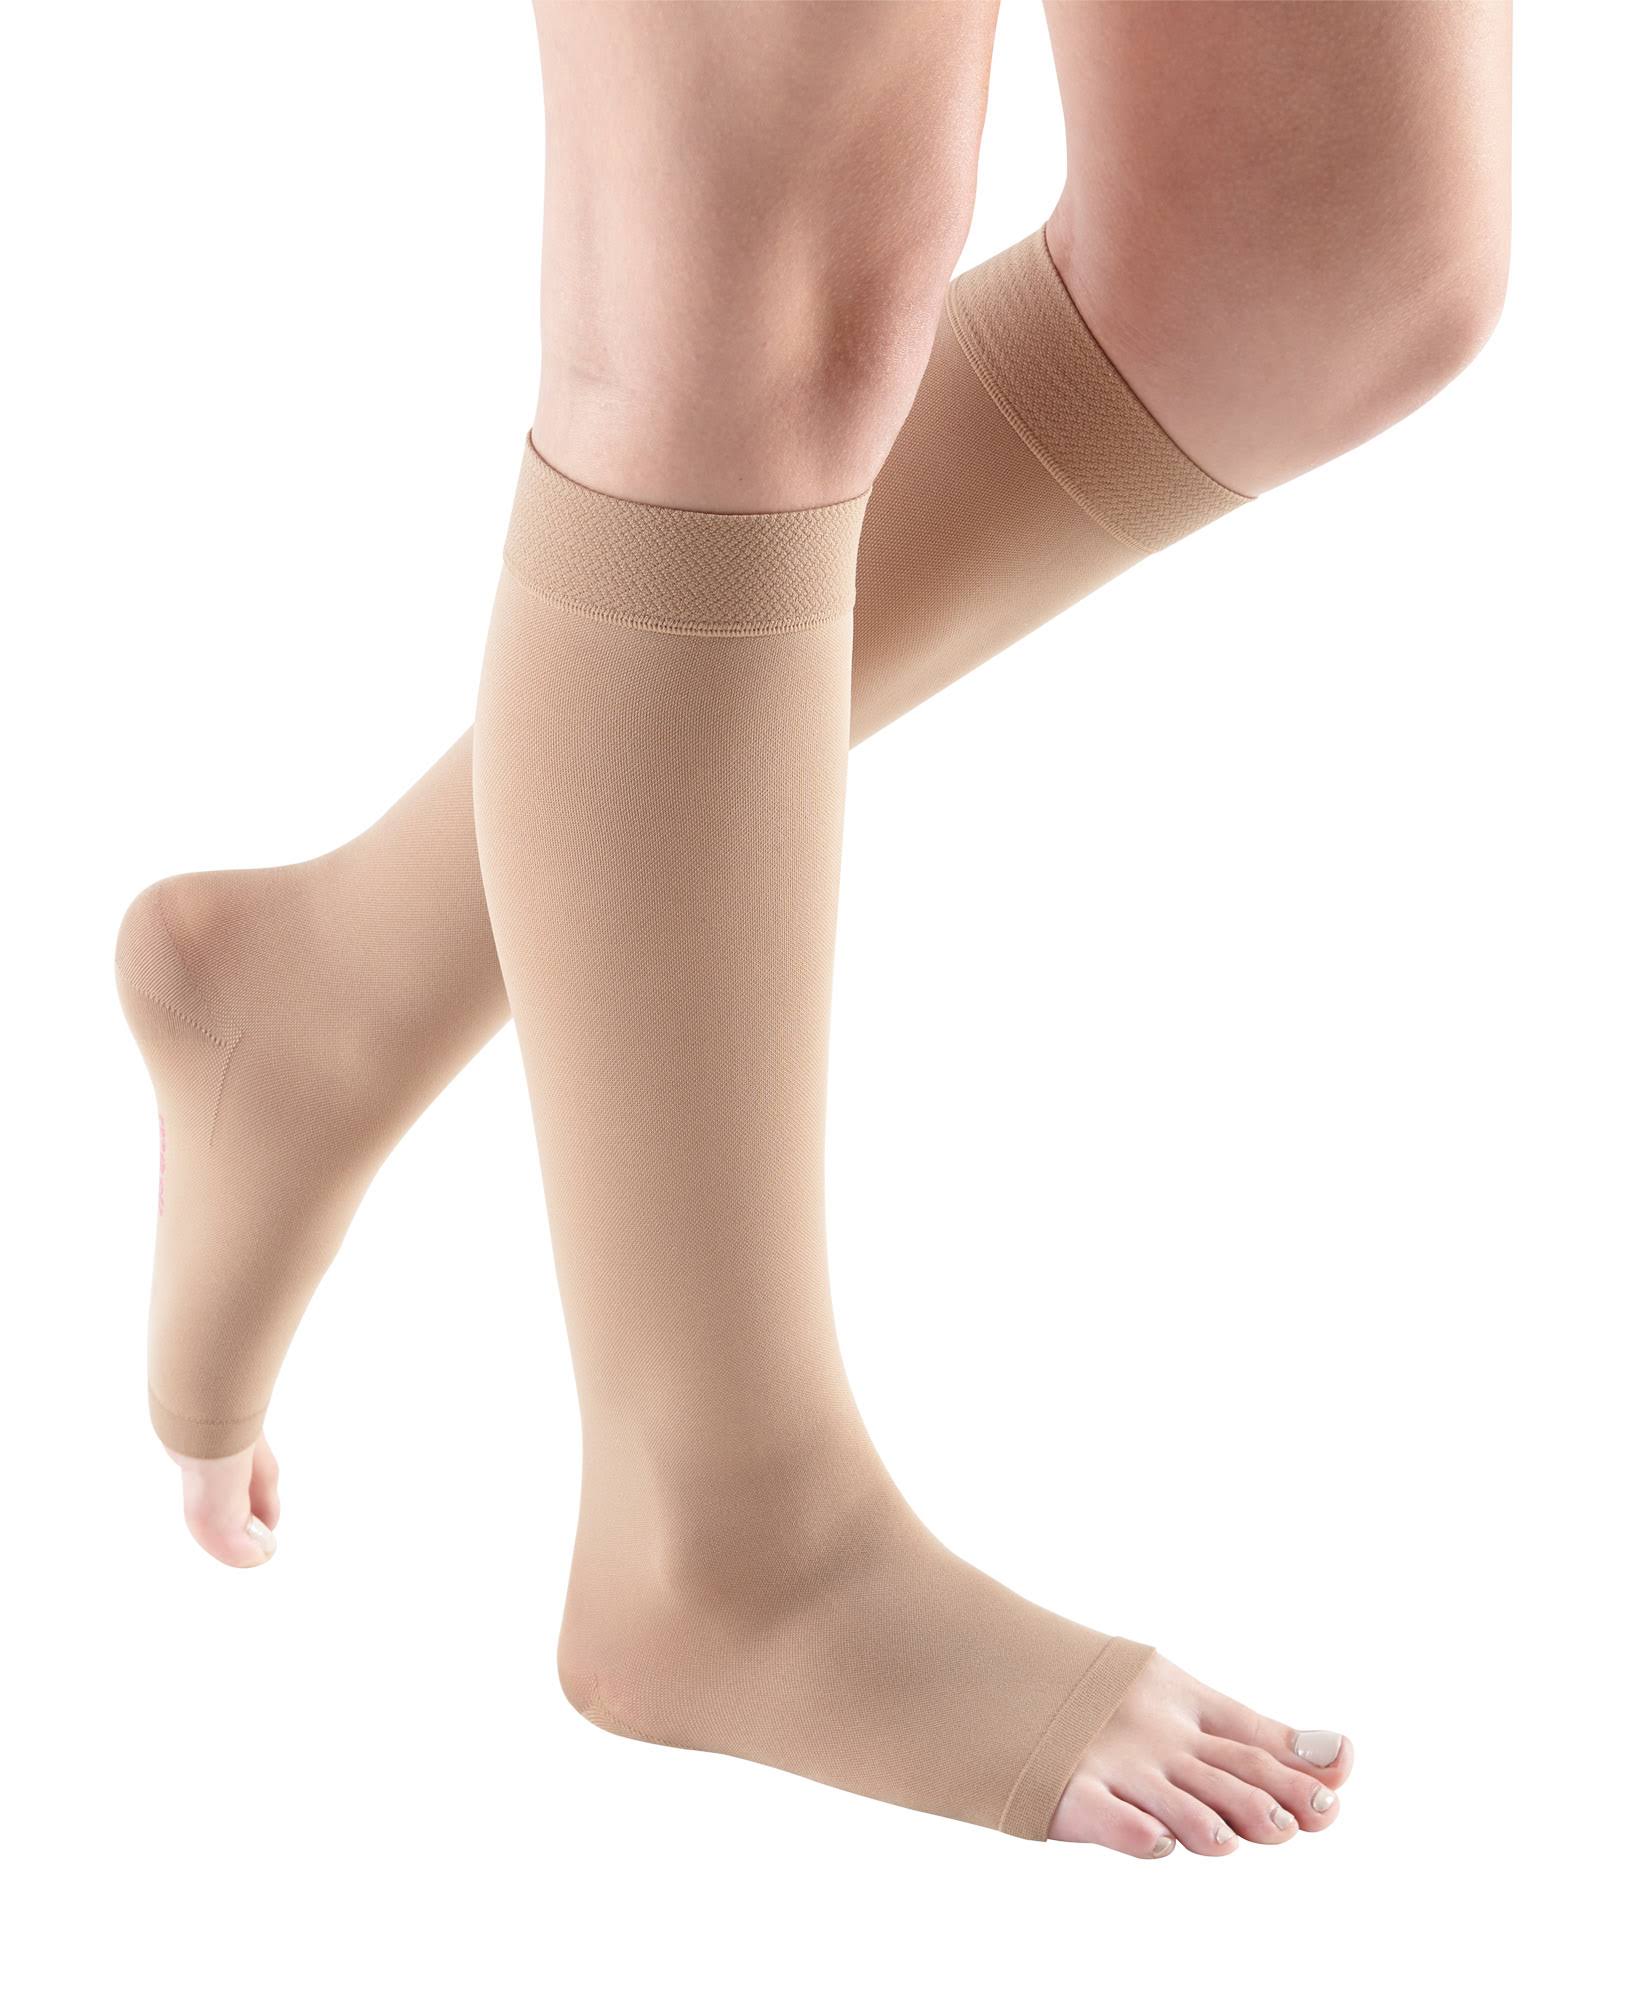 mediven Comfort Calf High Compression Stockings - Natural, Closed Toe, 20-30 mmHg